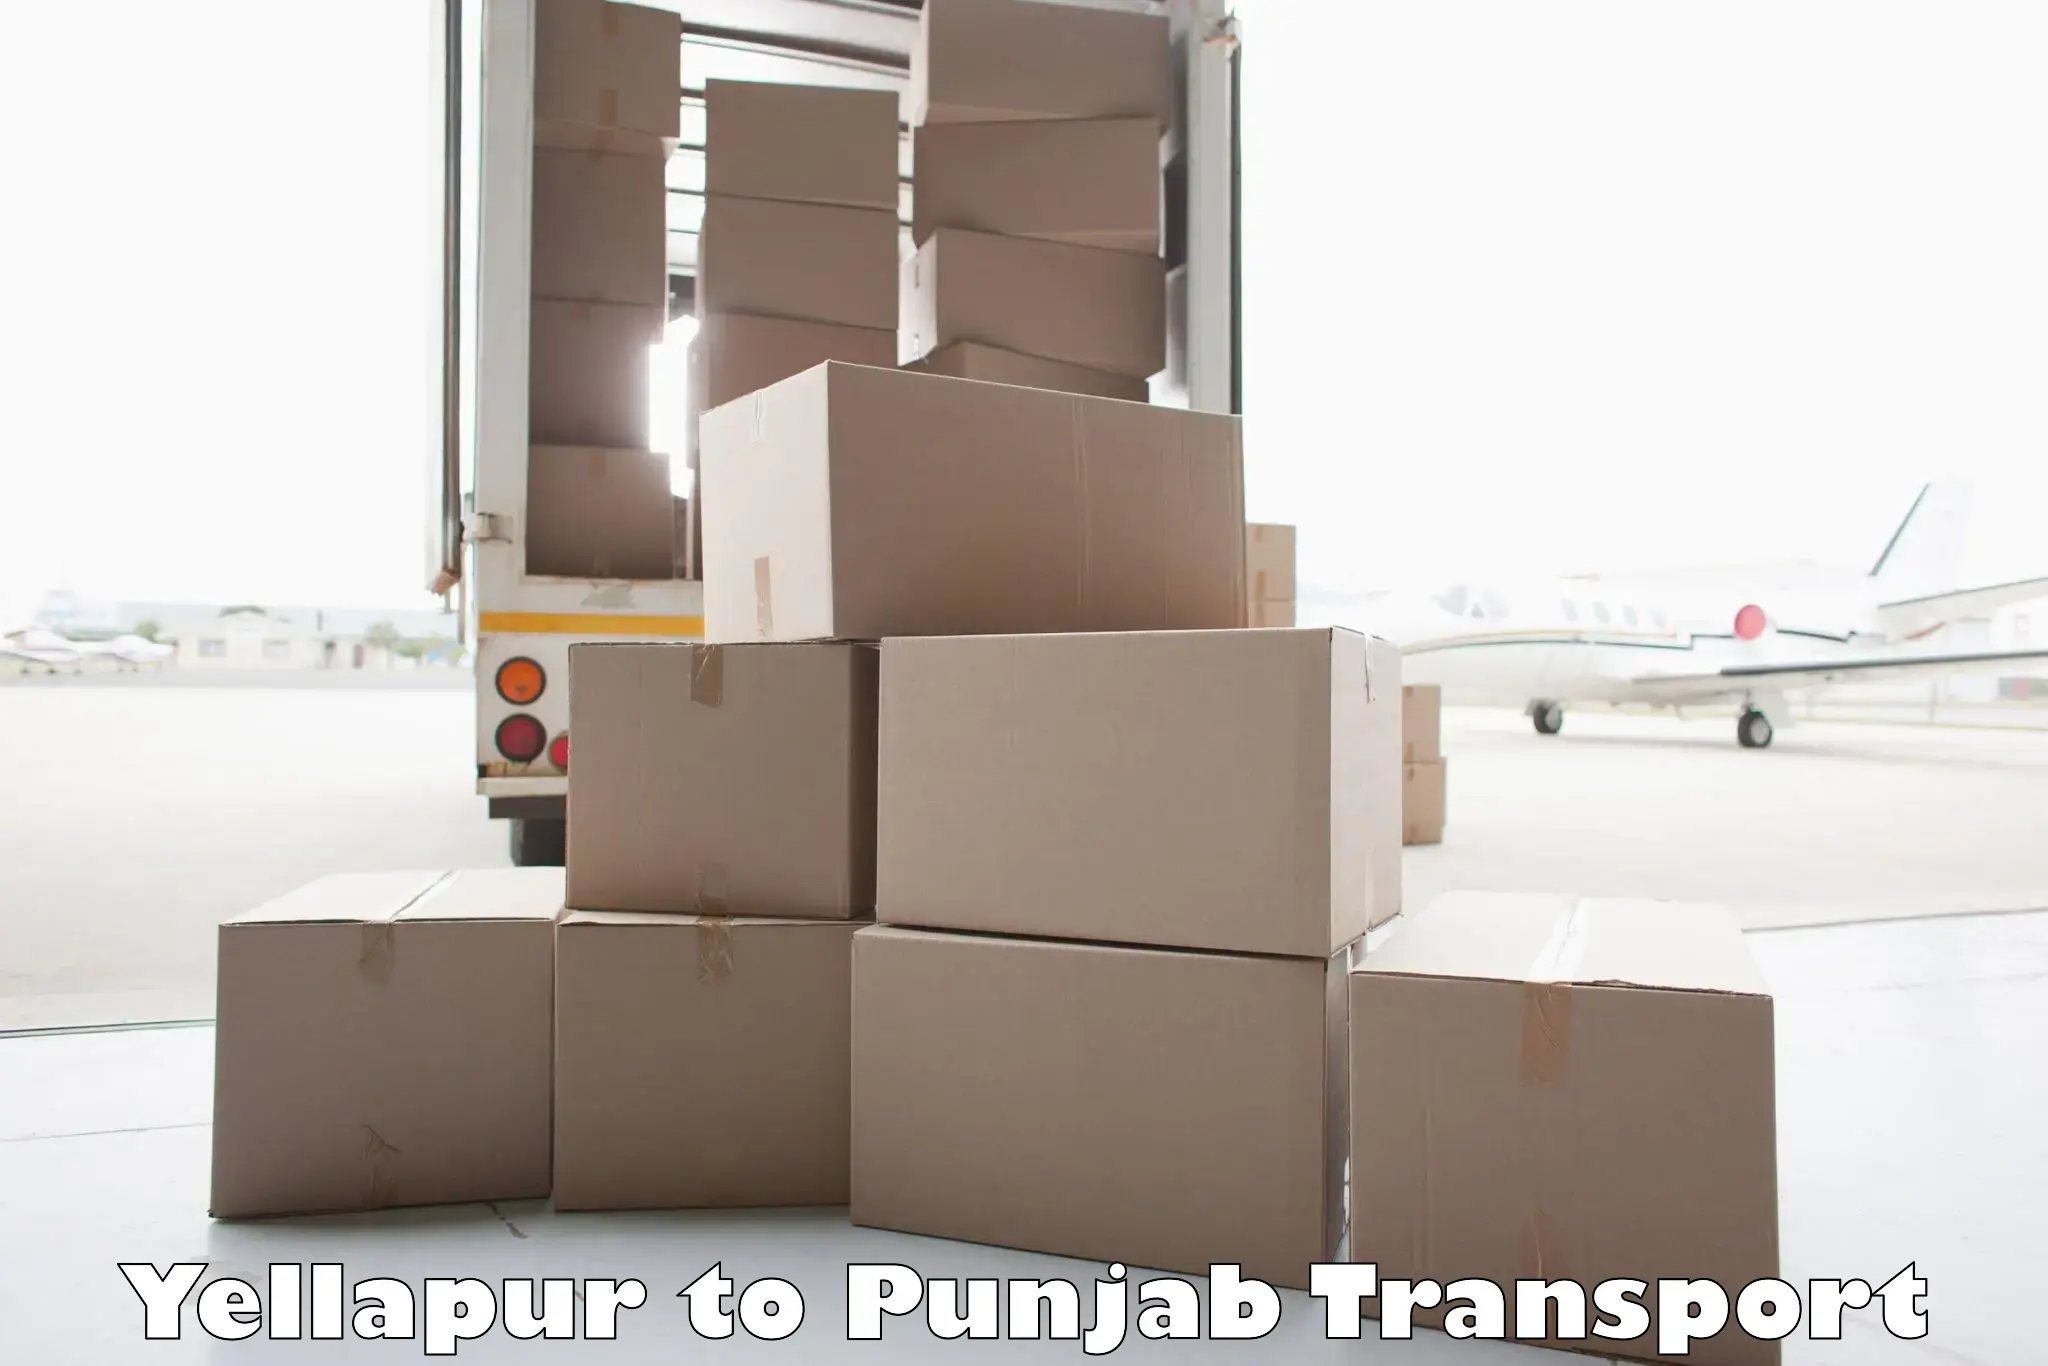 Transport in sharing Yellapur to Nawanshahr